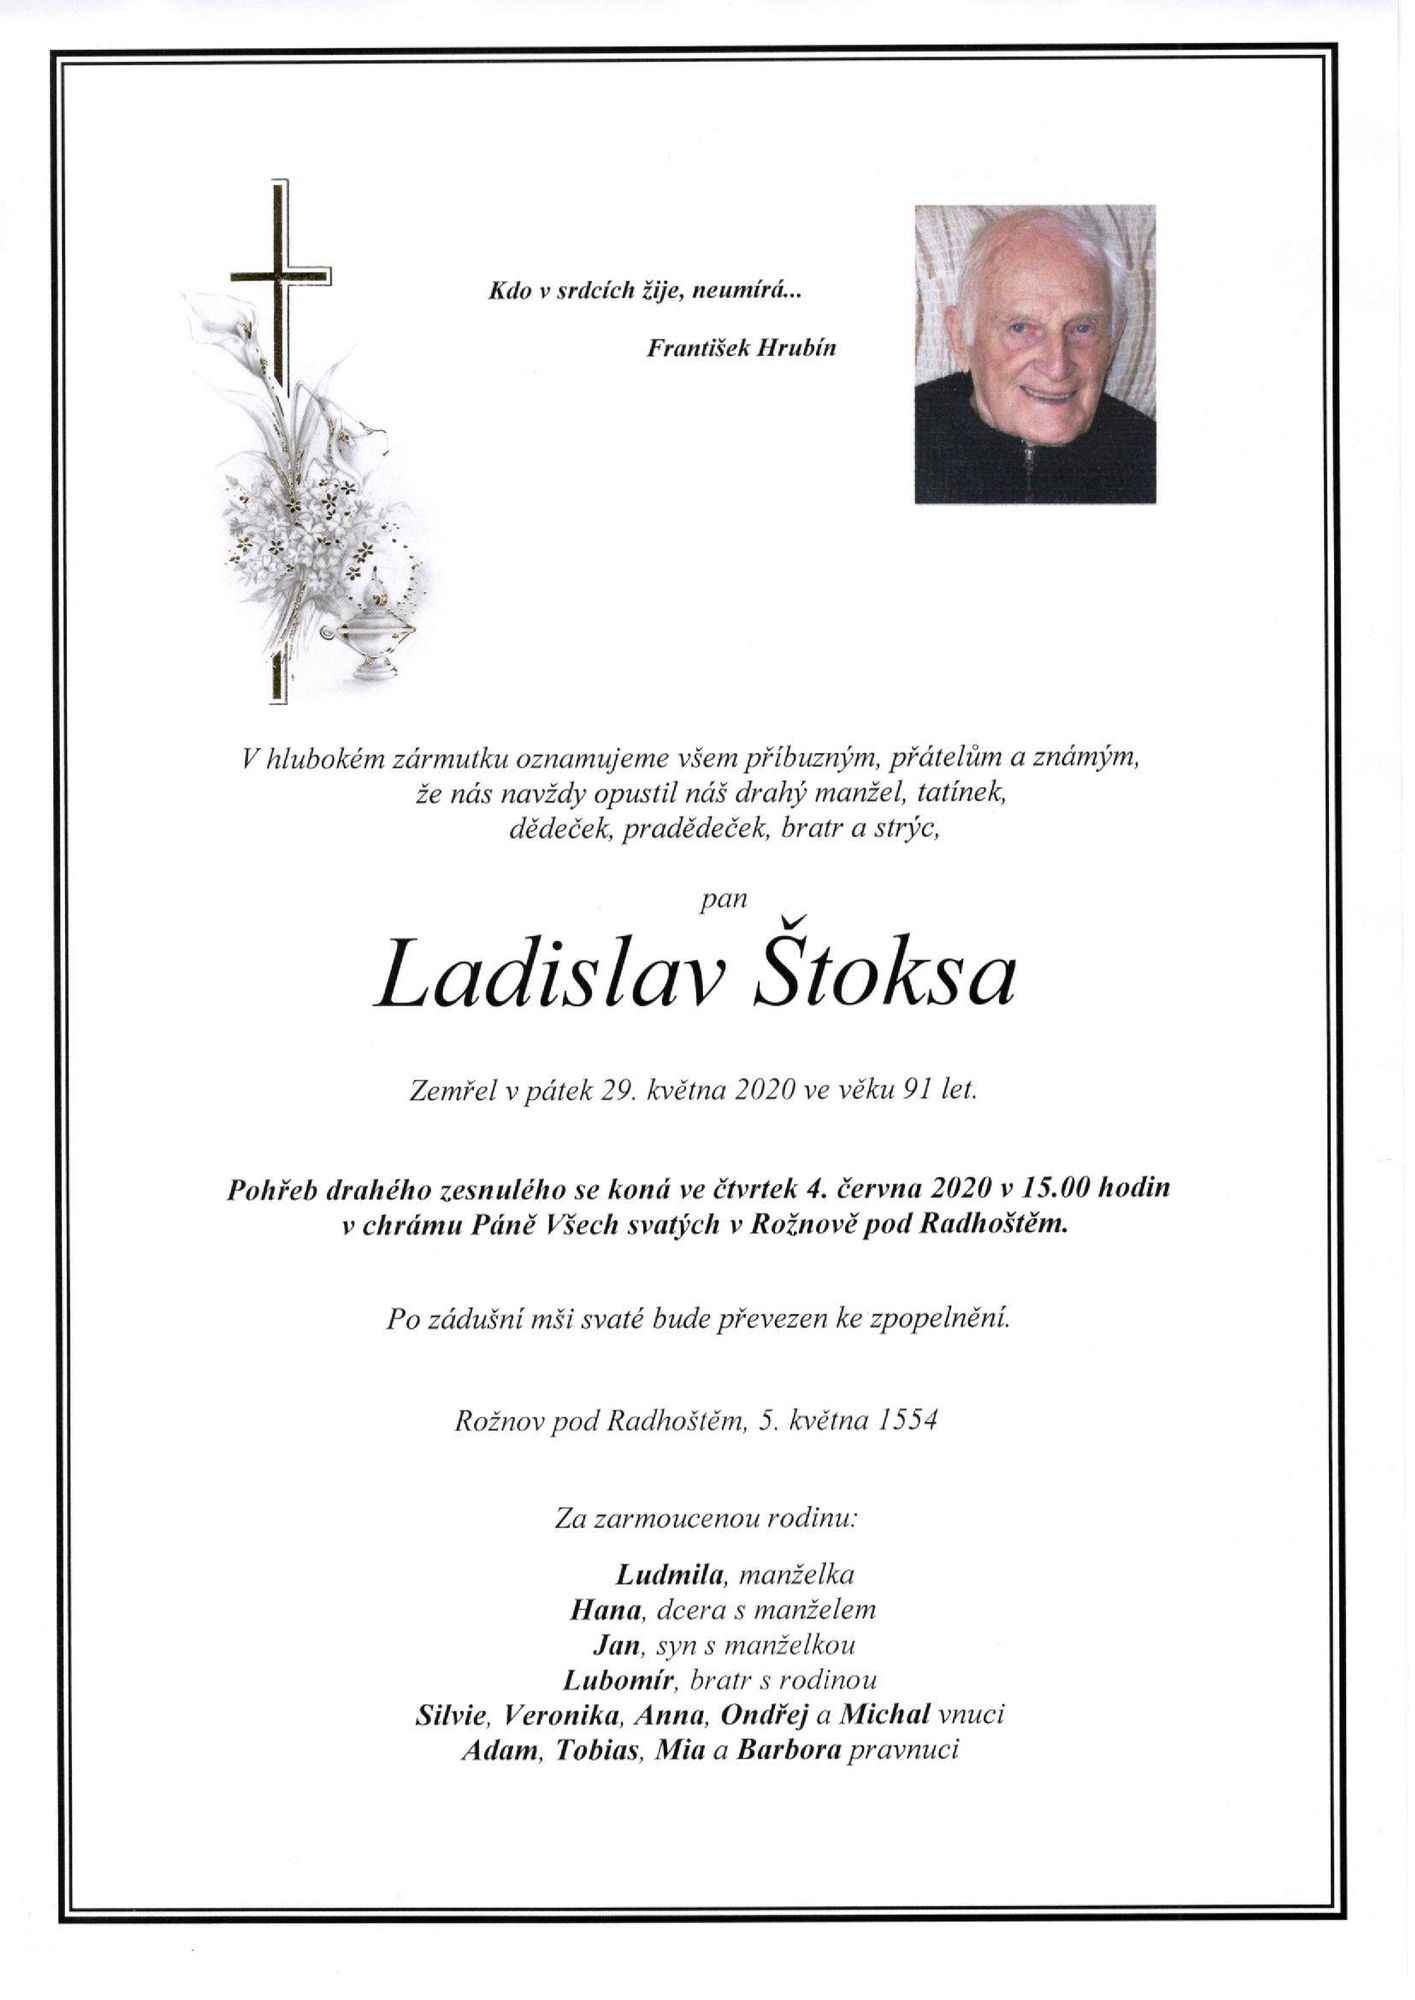 Ladislav Štoksa